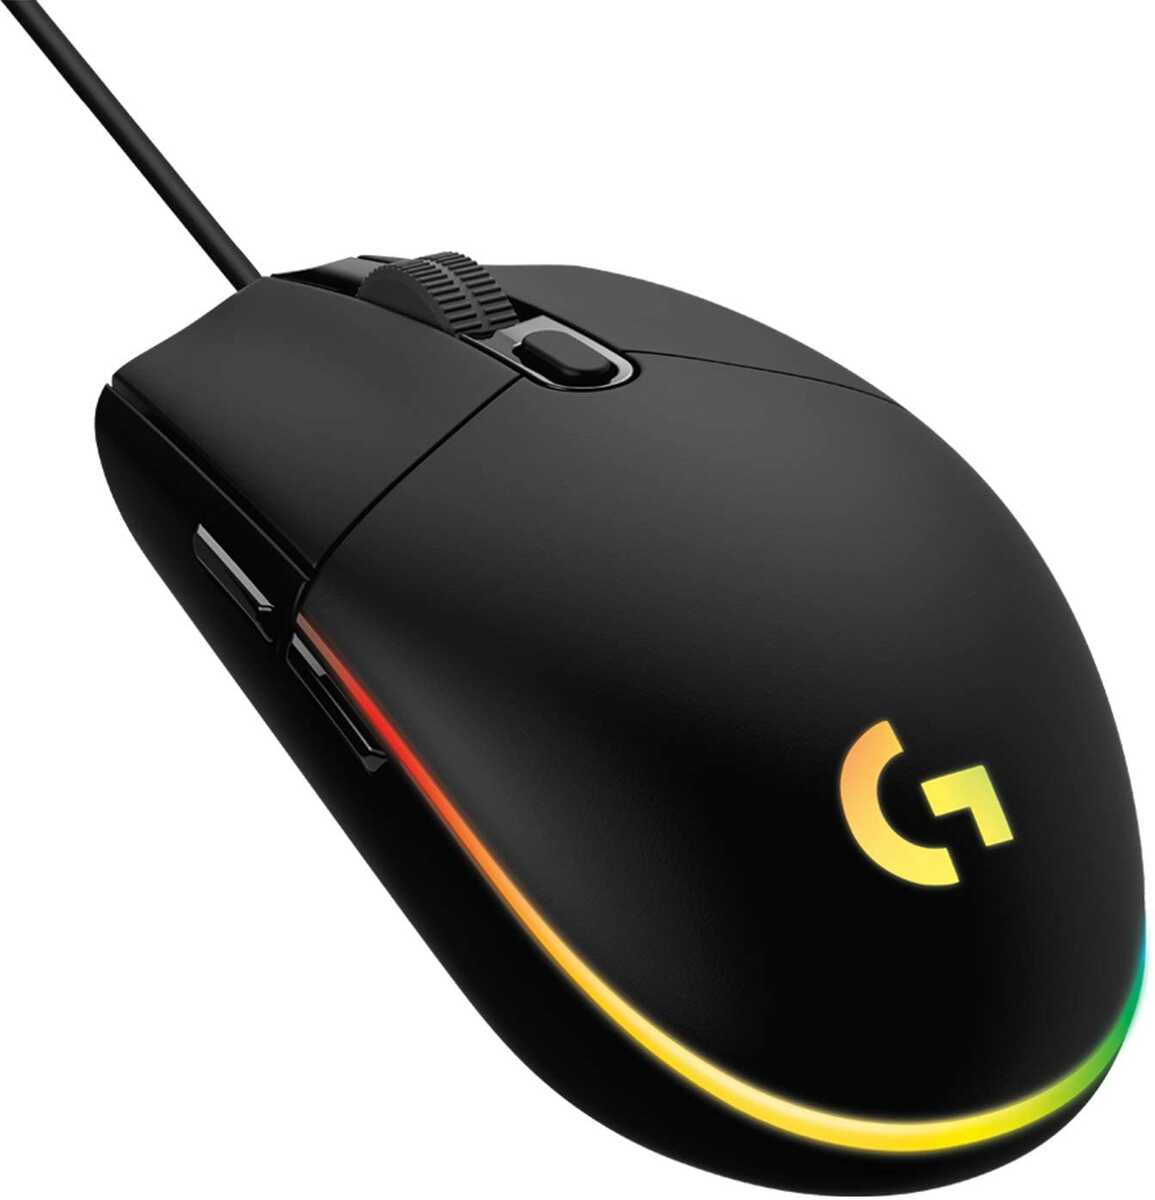 LOGITECH G203 Lightsync Optical Gaming Mouse – Black.